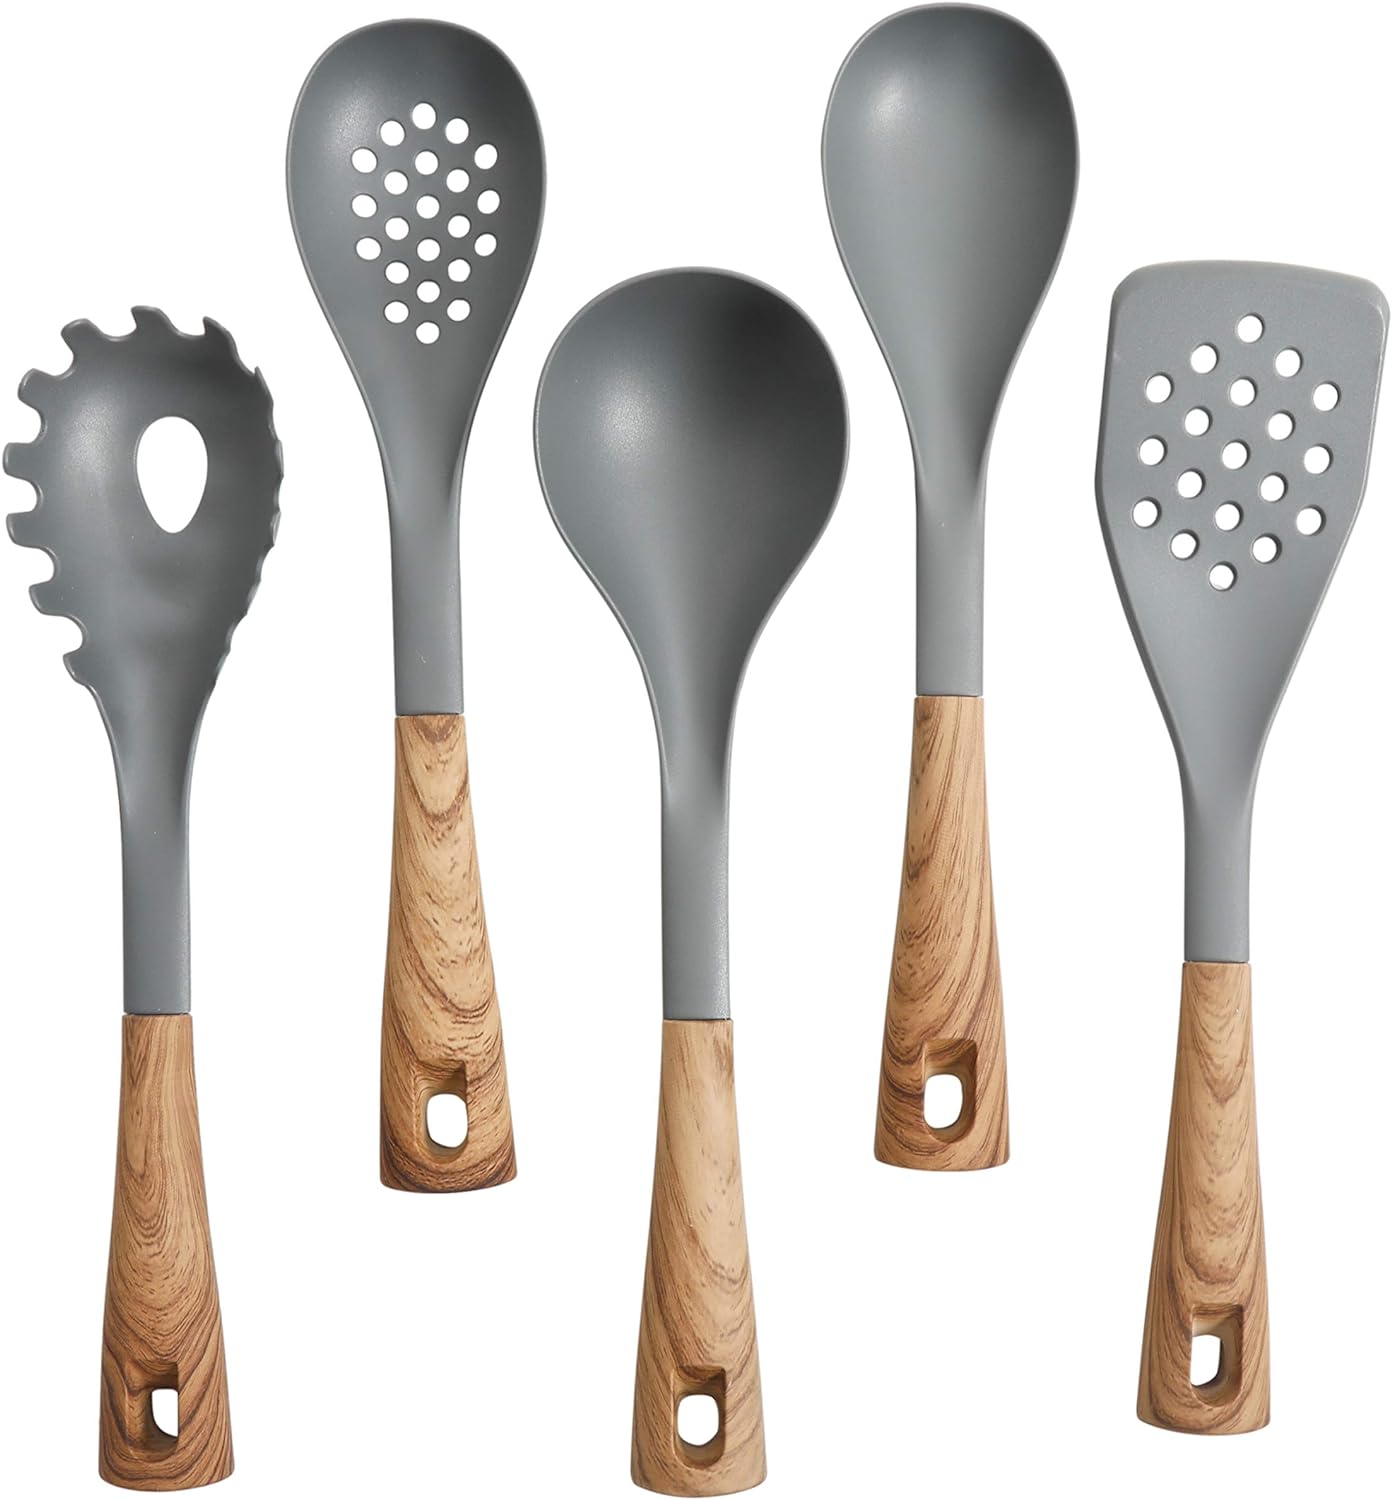 everwood-kitchen-nylon-tools-925101199m-new-wood/gray-2